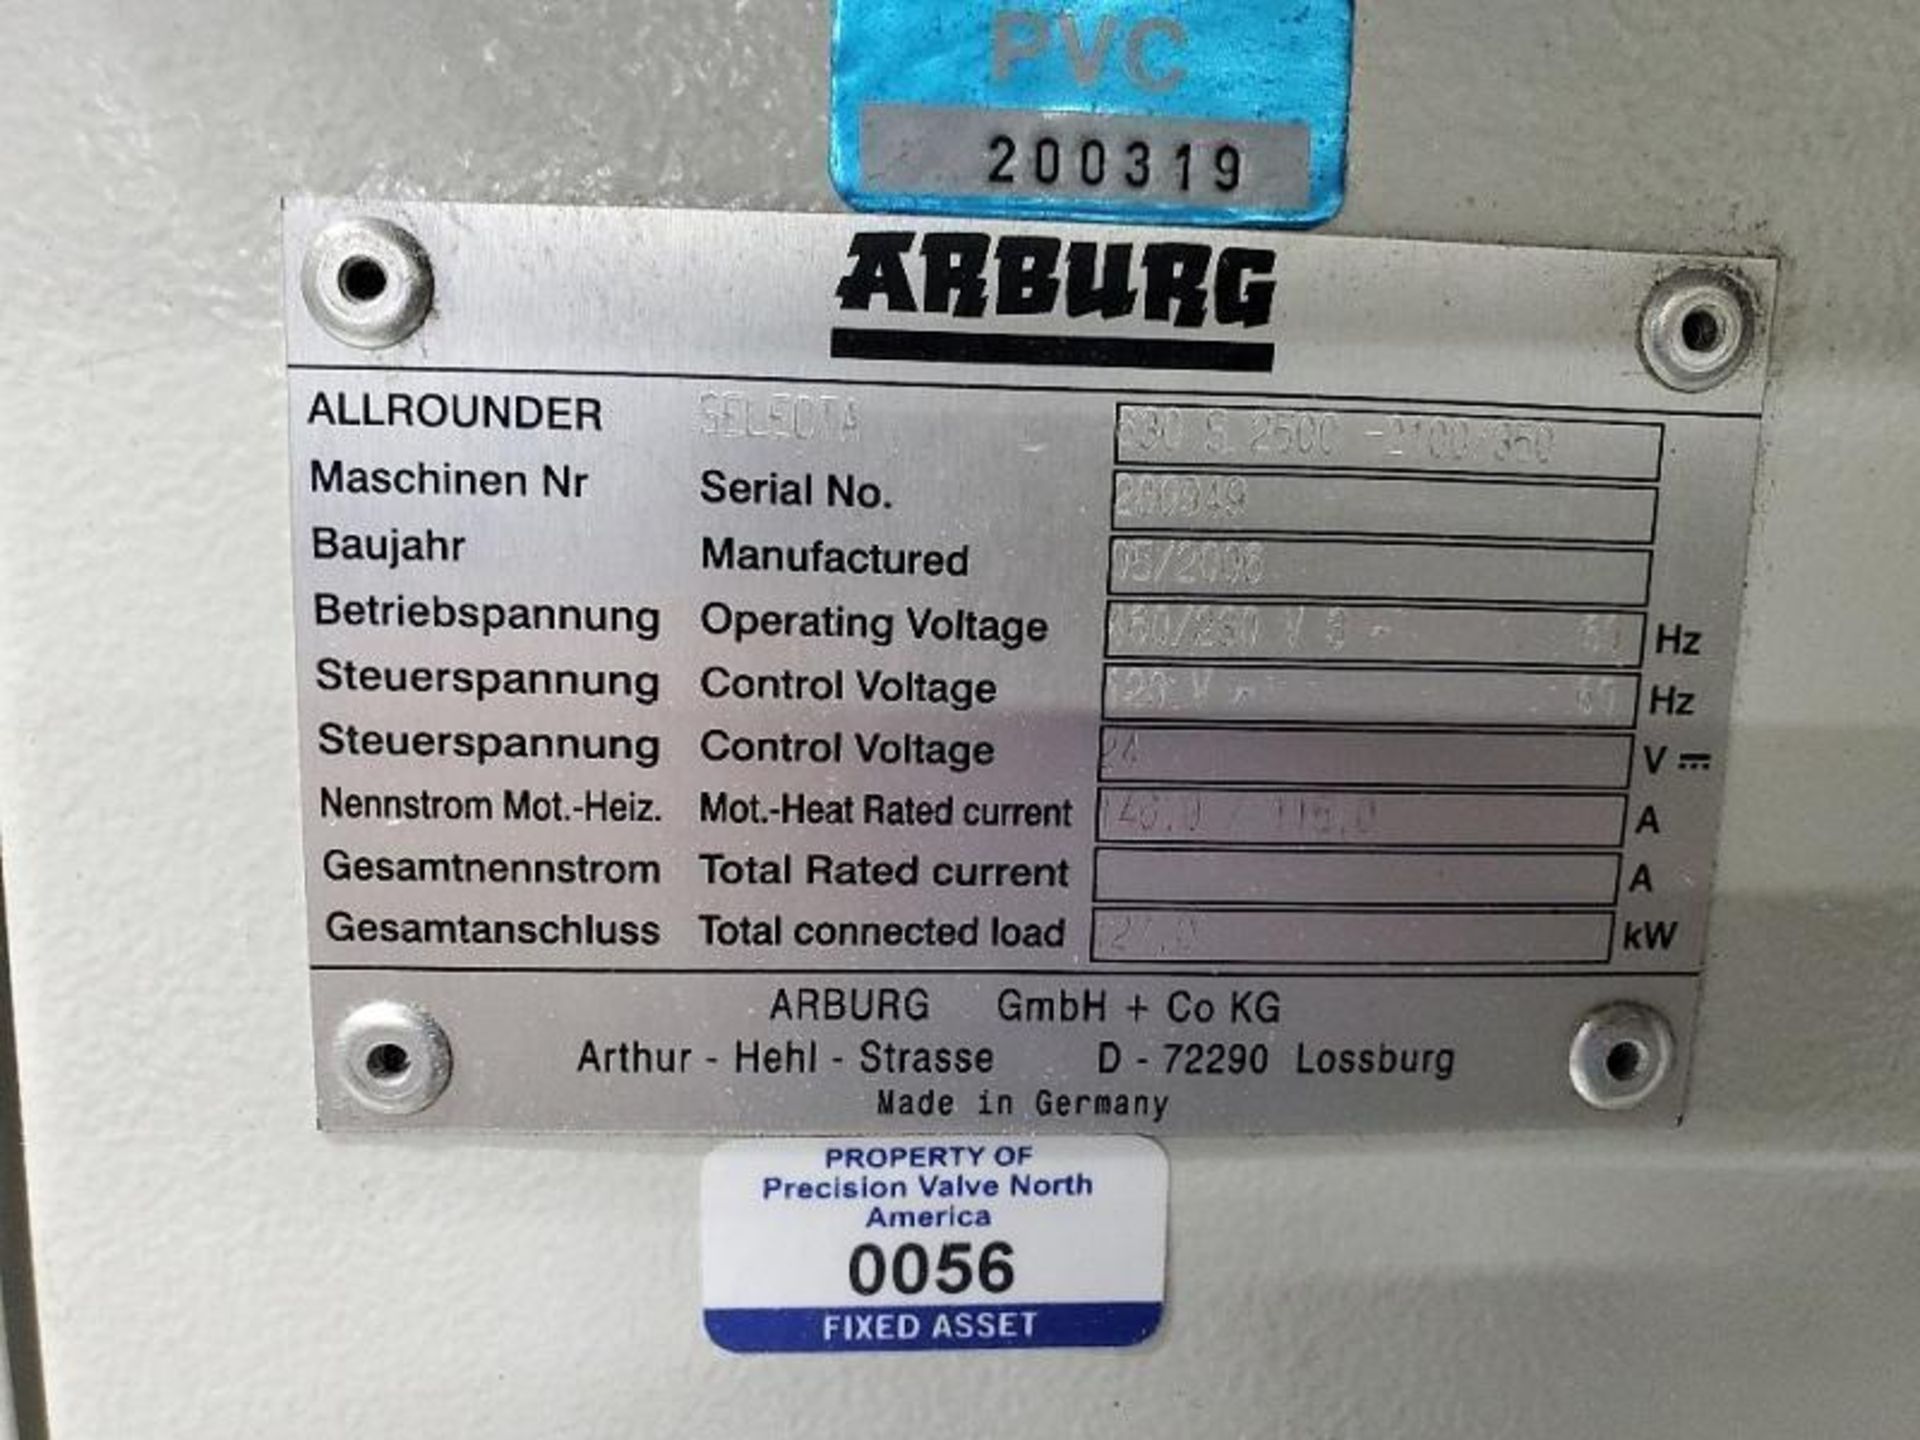 275 Ton Arburg 630 S 2500-2100/350 Injection Molding Machine, 10.2oz Shot Size, Selogica Control - Image 8 of 8